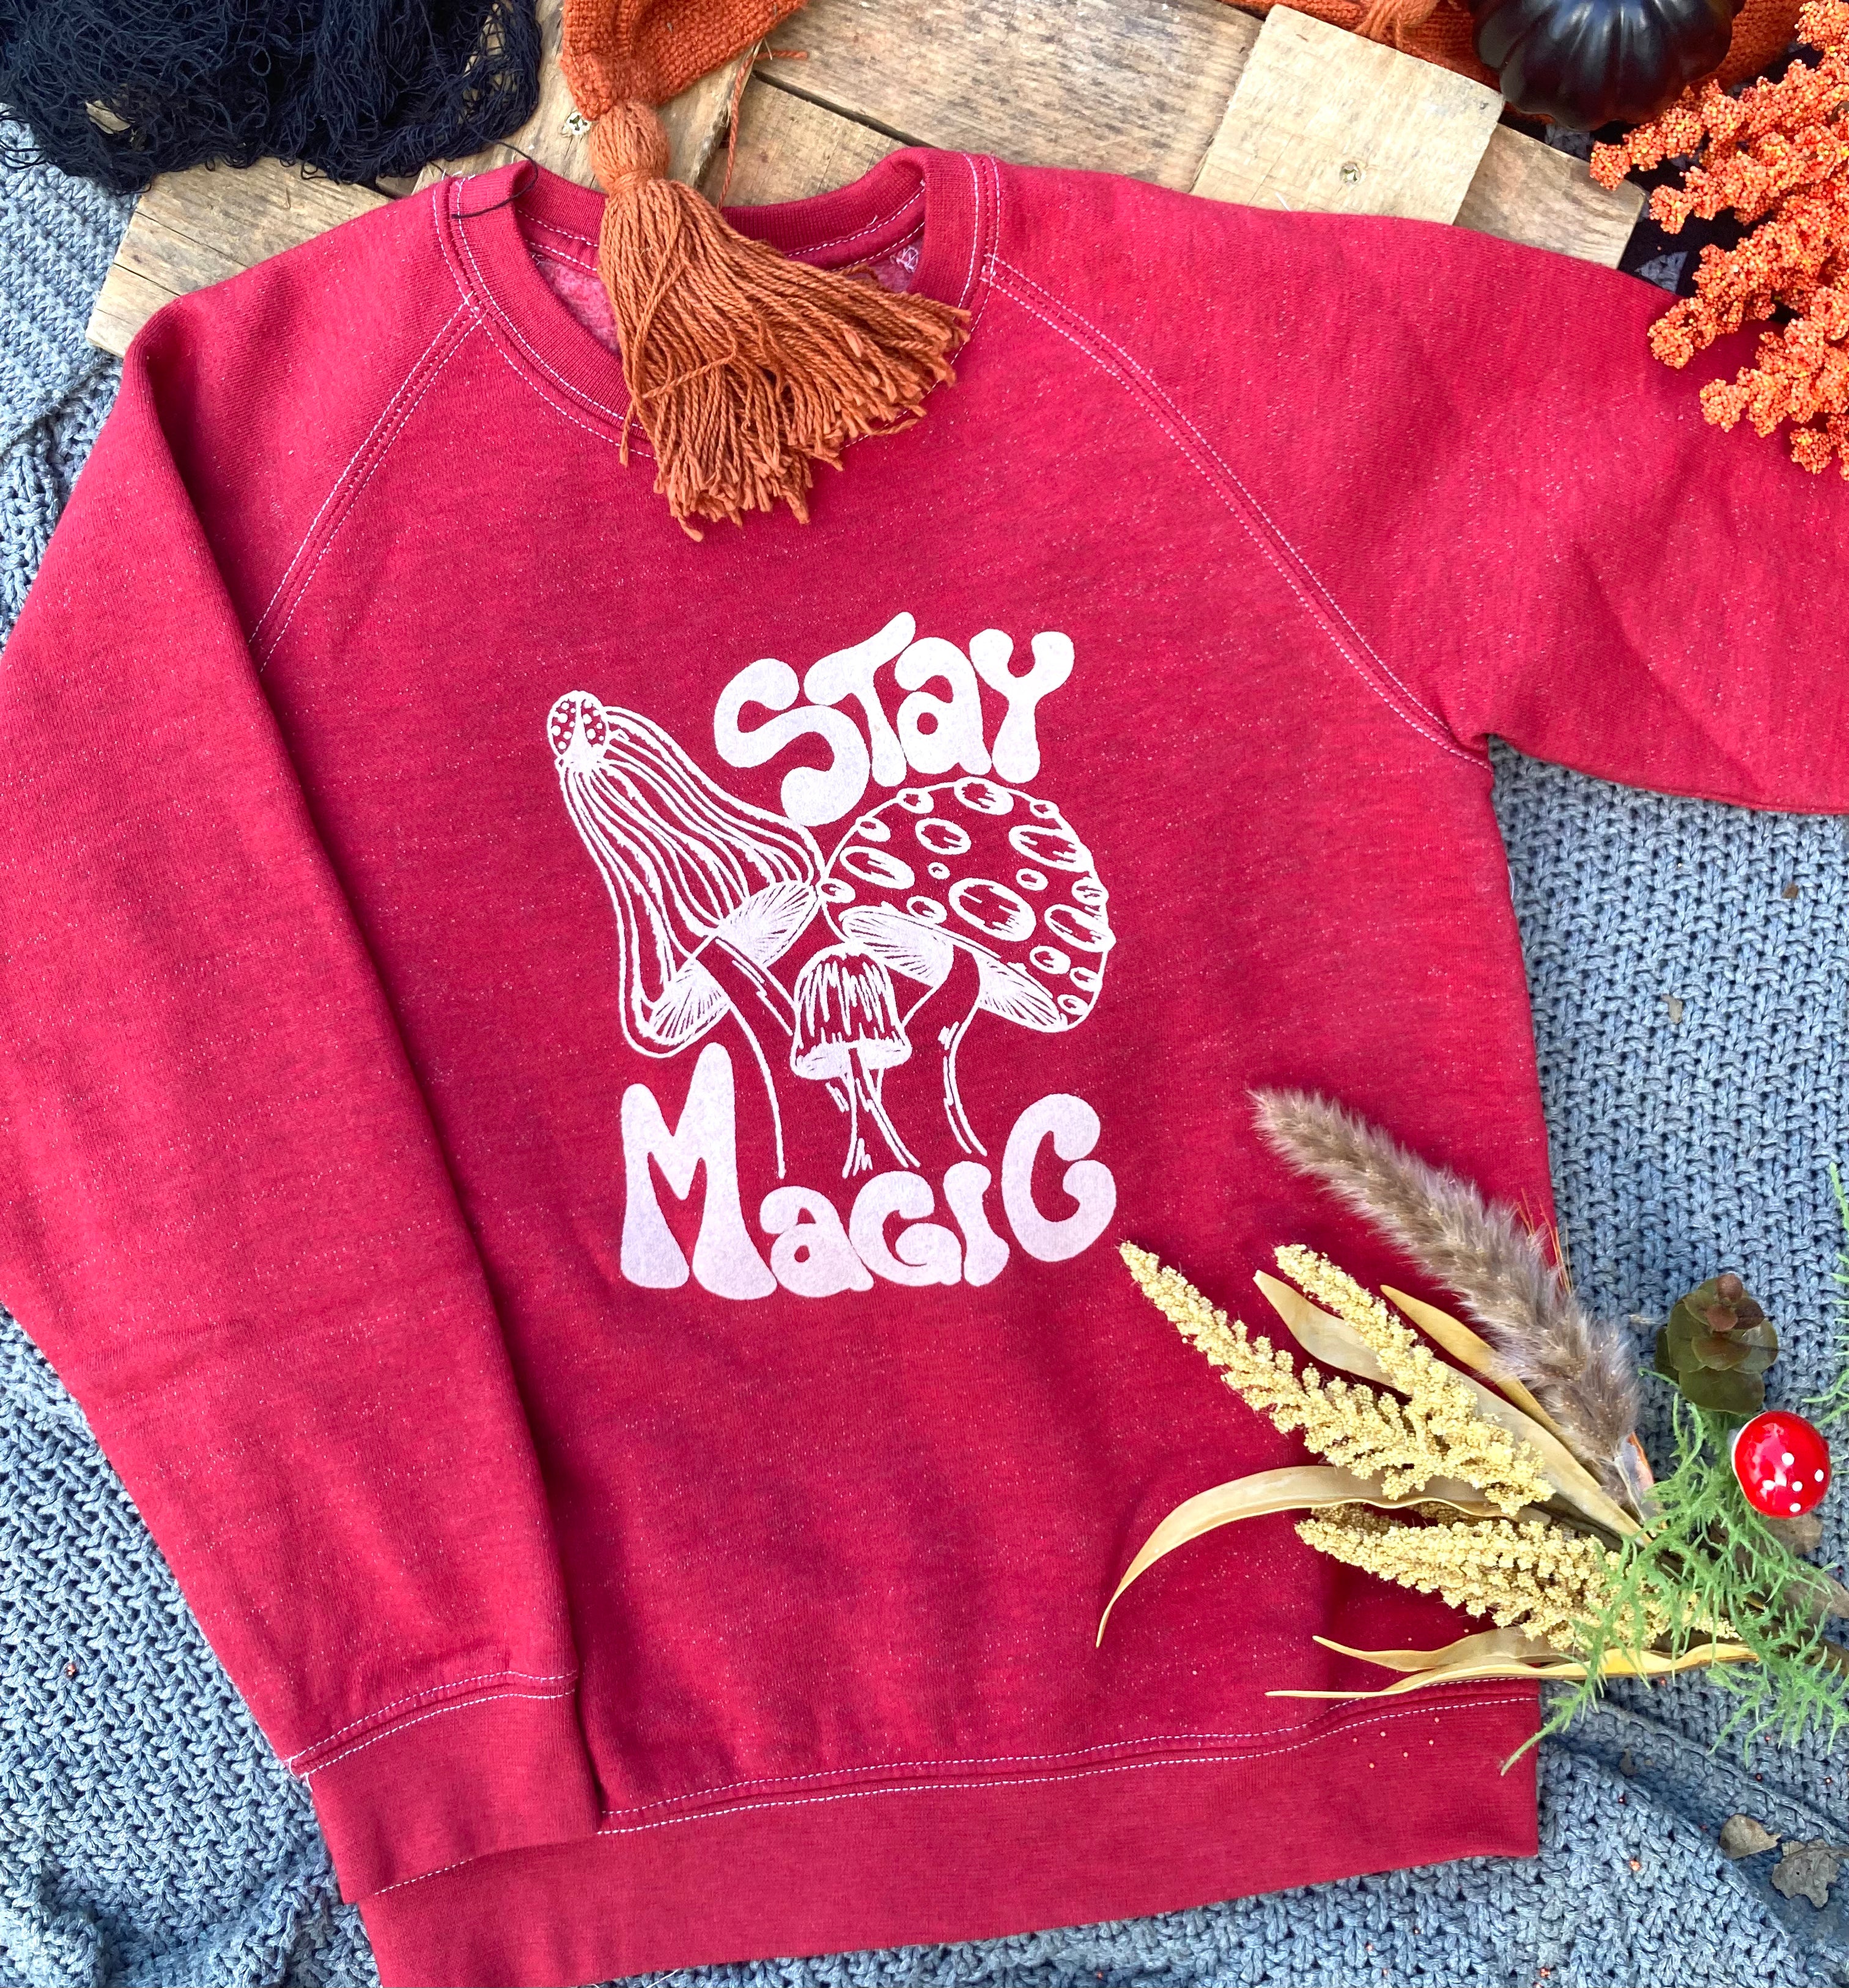 Stay Magic Sweatshirt